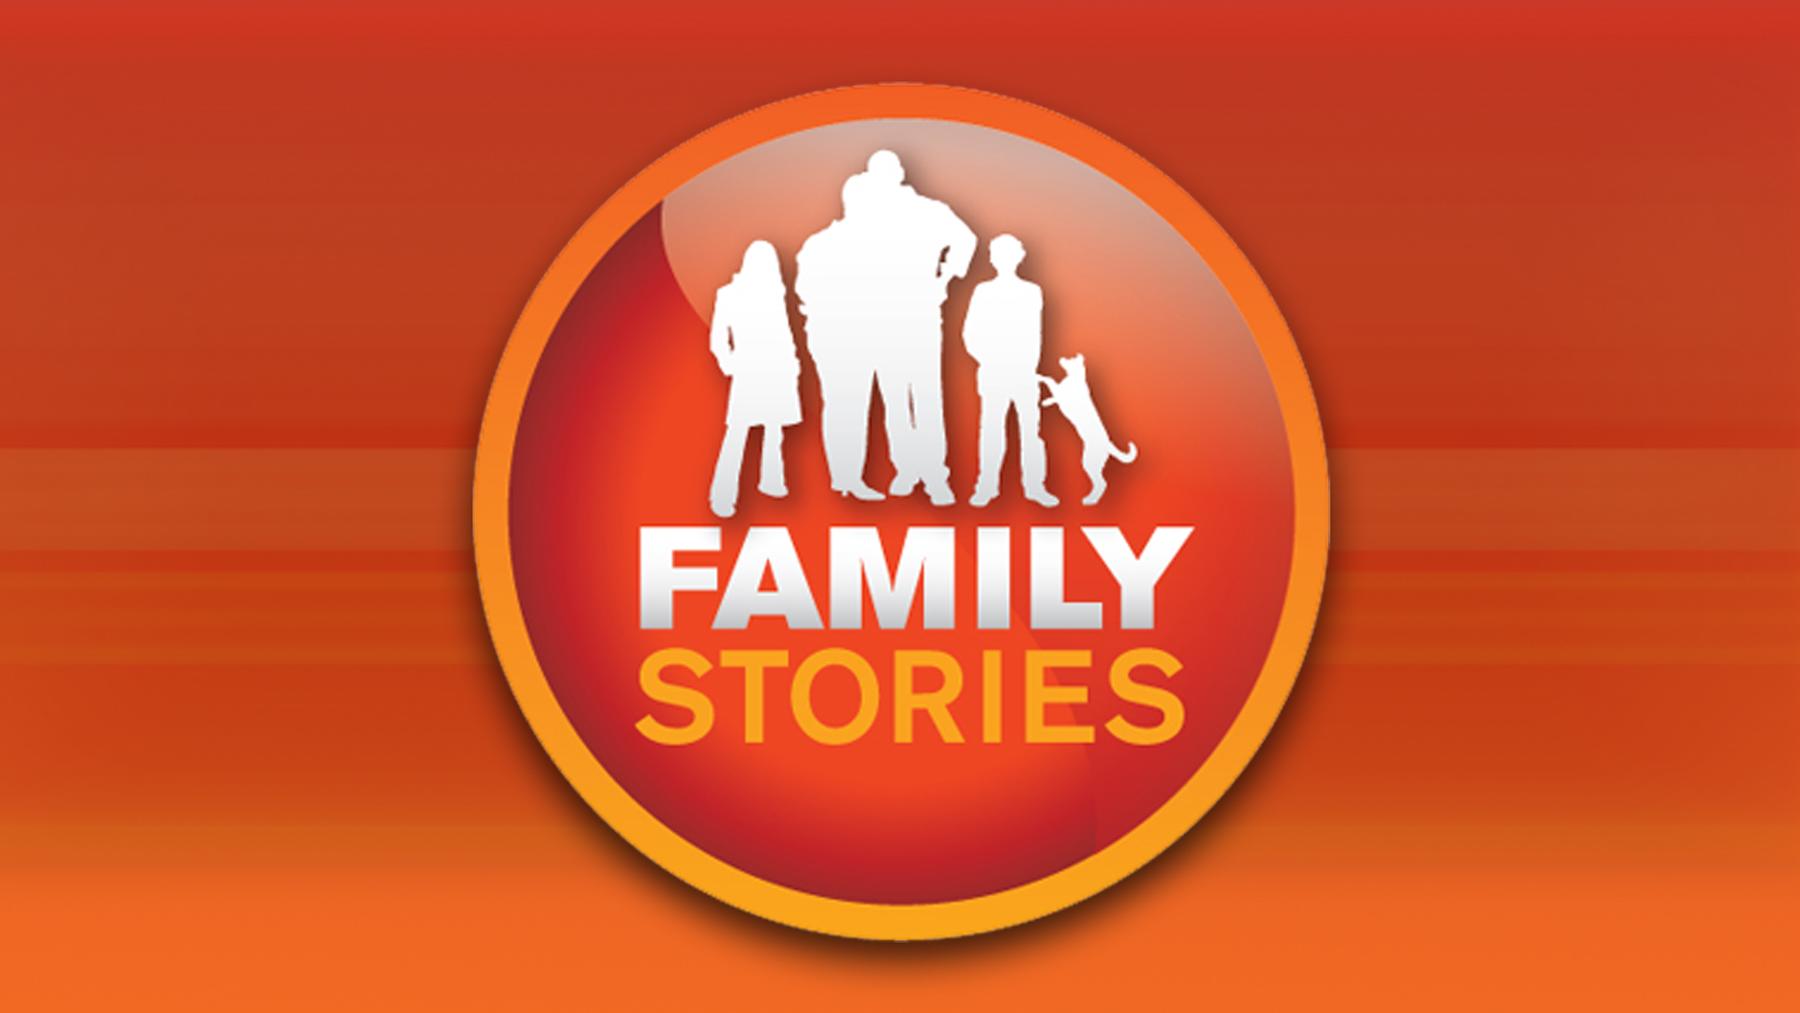 Family Stories